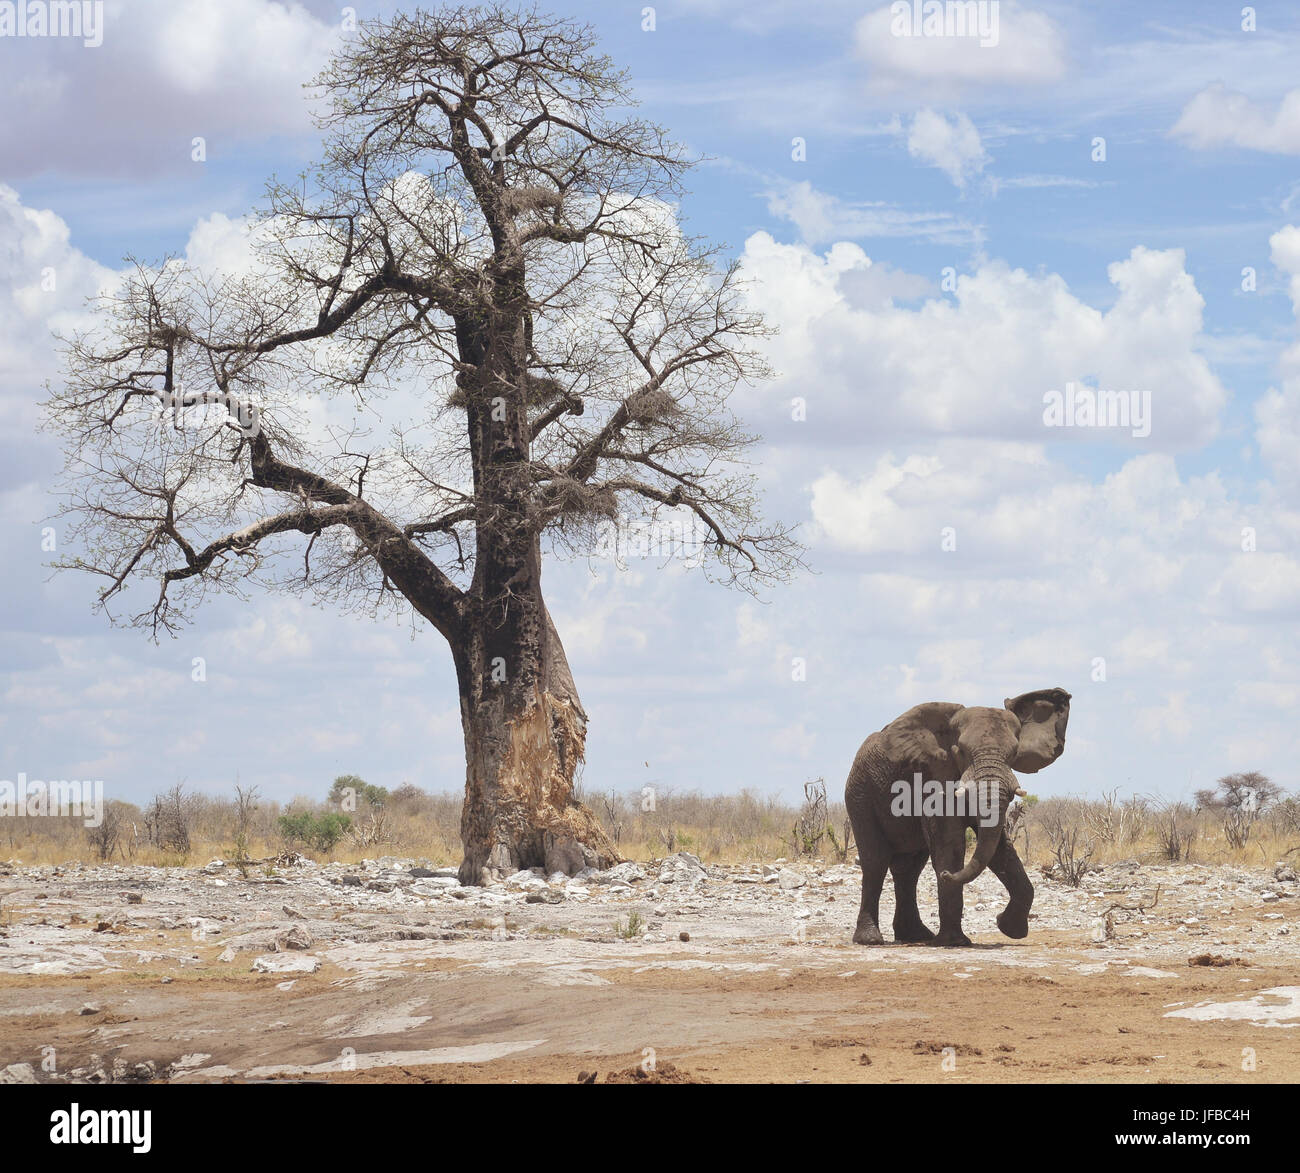 elephant in Africa Stock Photo